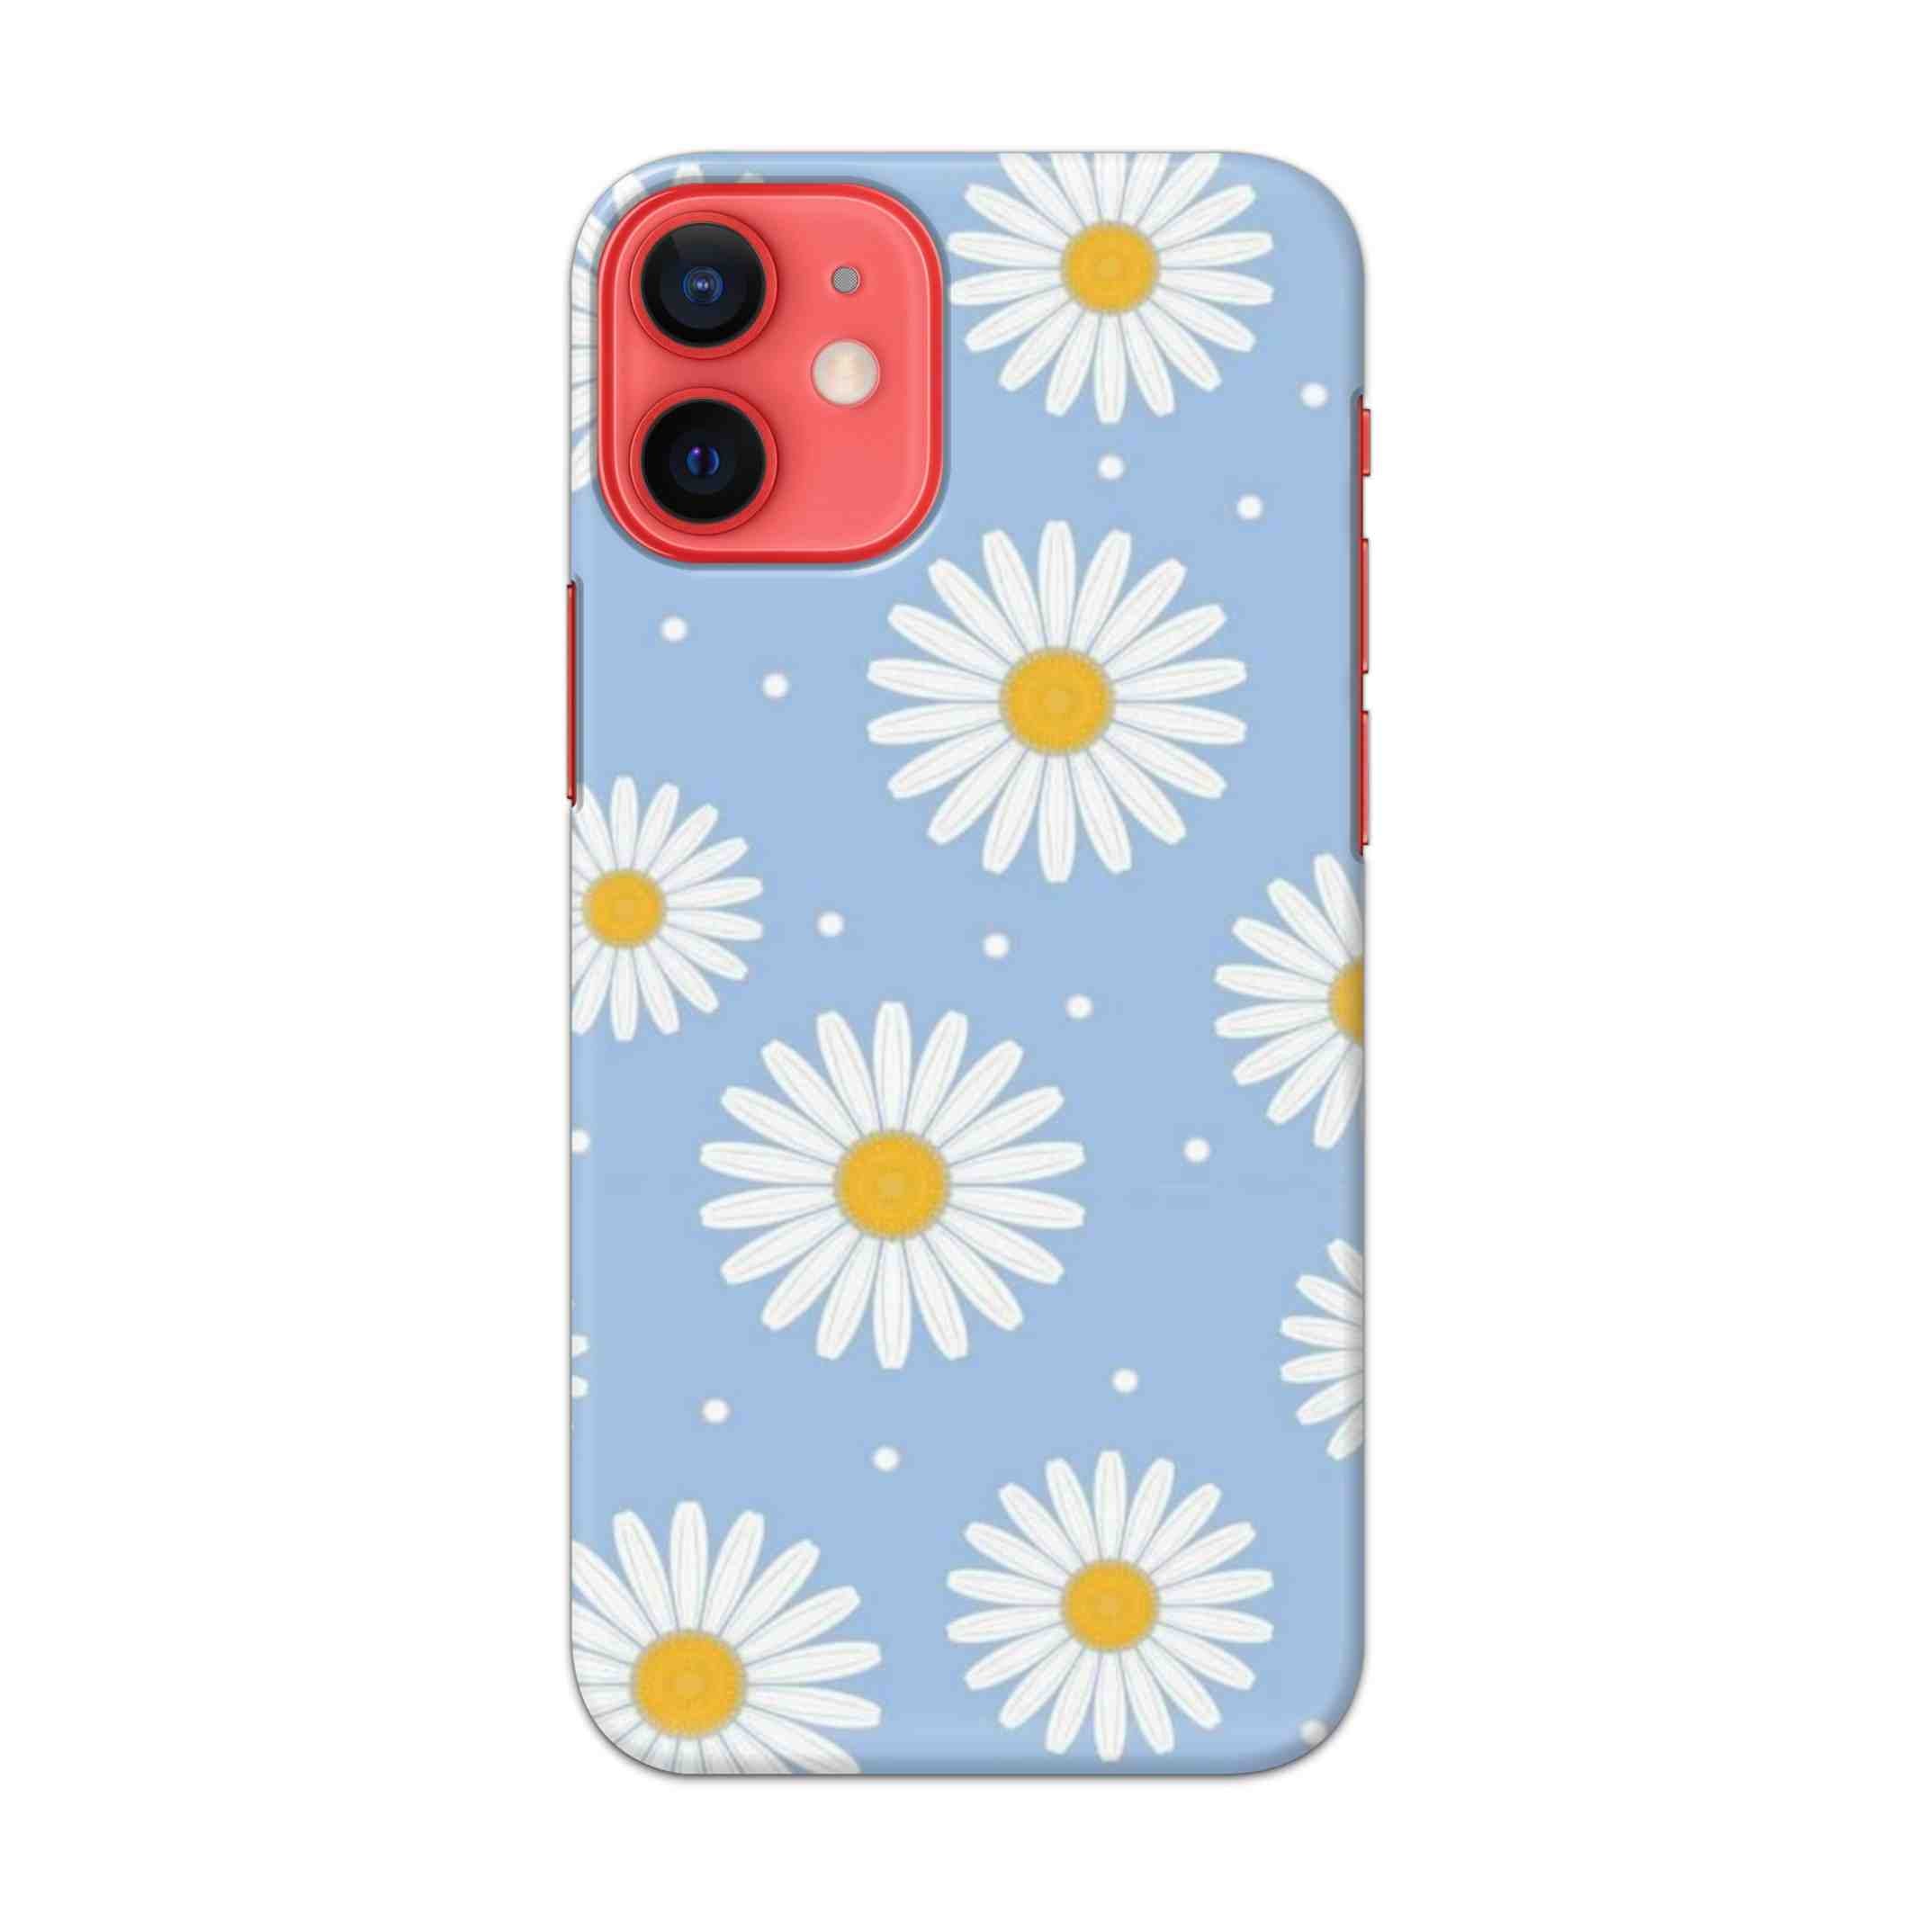 Buy White Sunflower Hard Back Mobile Phone Case Cover For Apple iPhone 12 Online